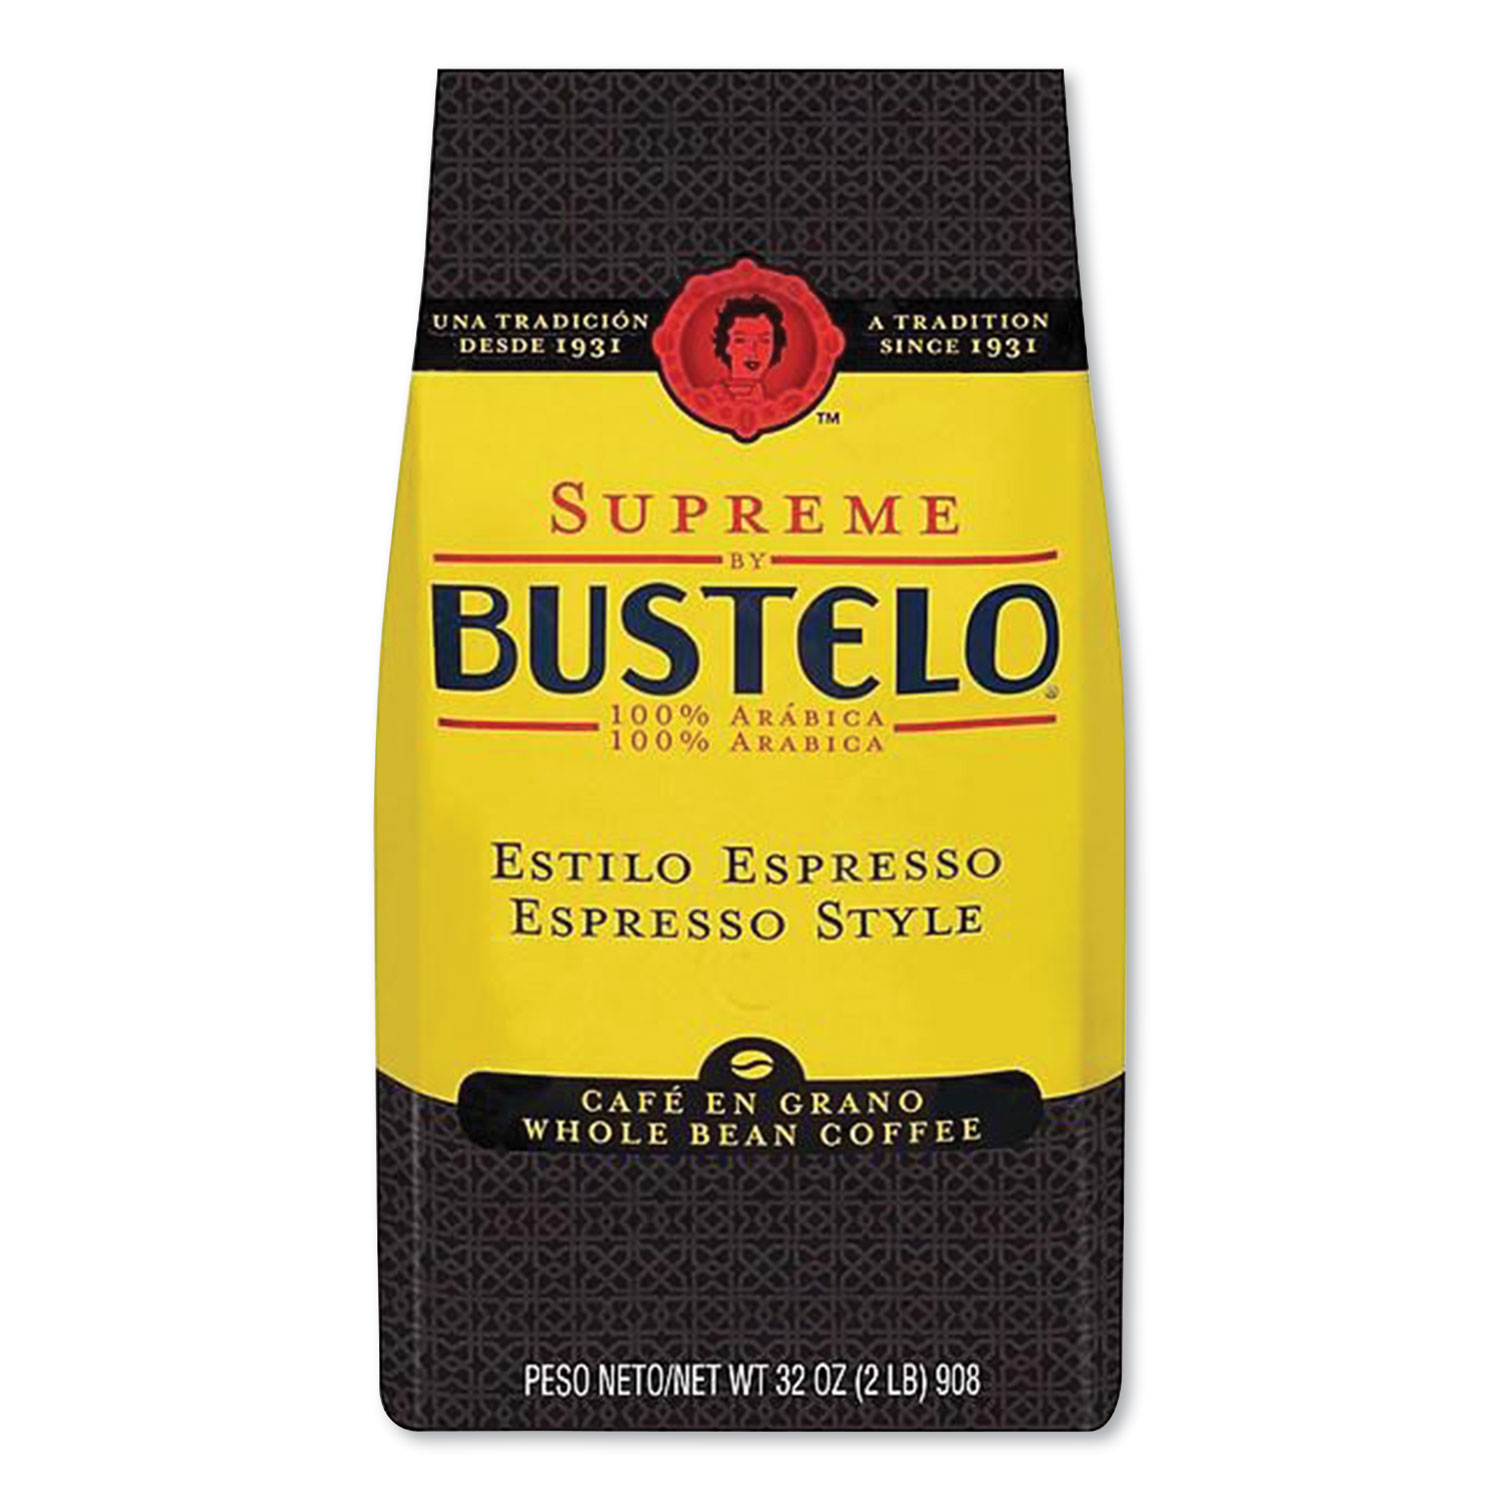  Café Bustelo SMU01800 Supreme Espresso-Style Whole Bean Coffee, Dark Roast, 2 lb Bag (SMU2071485) 